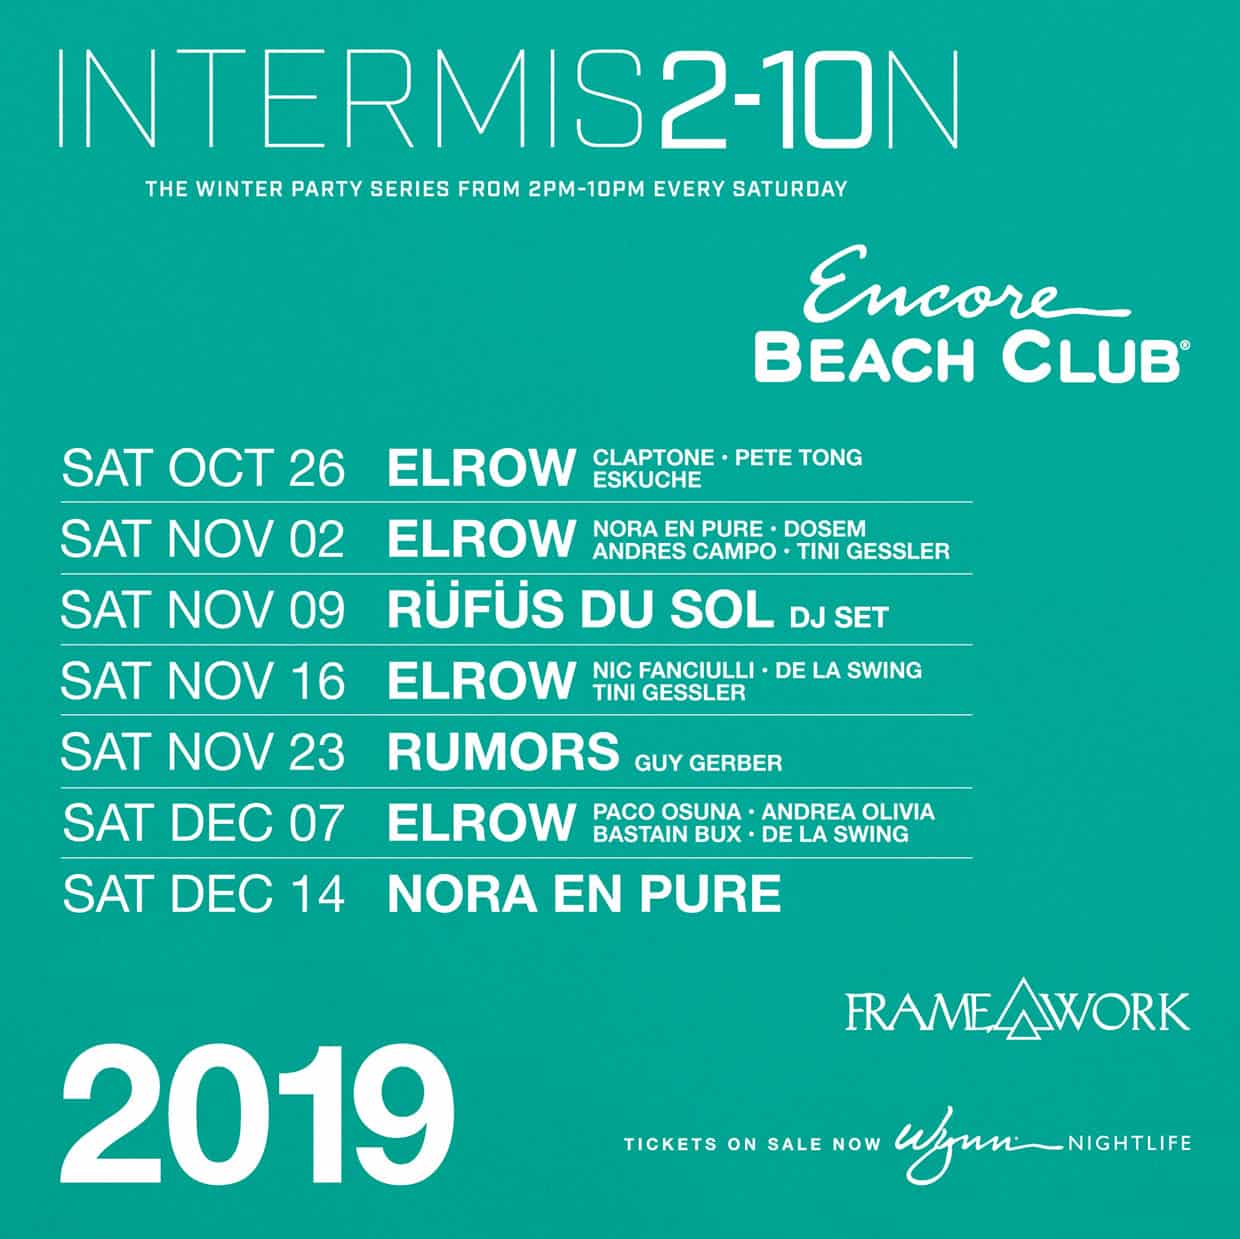 Intermission Encore Beach Club Winter Party Free Entry